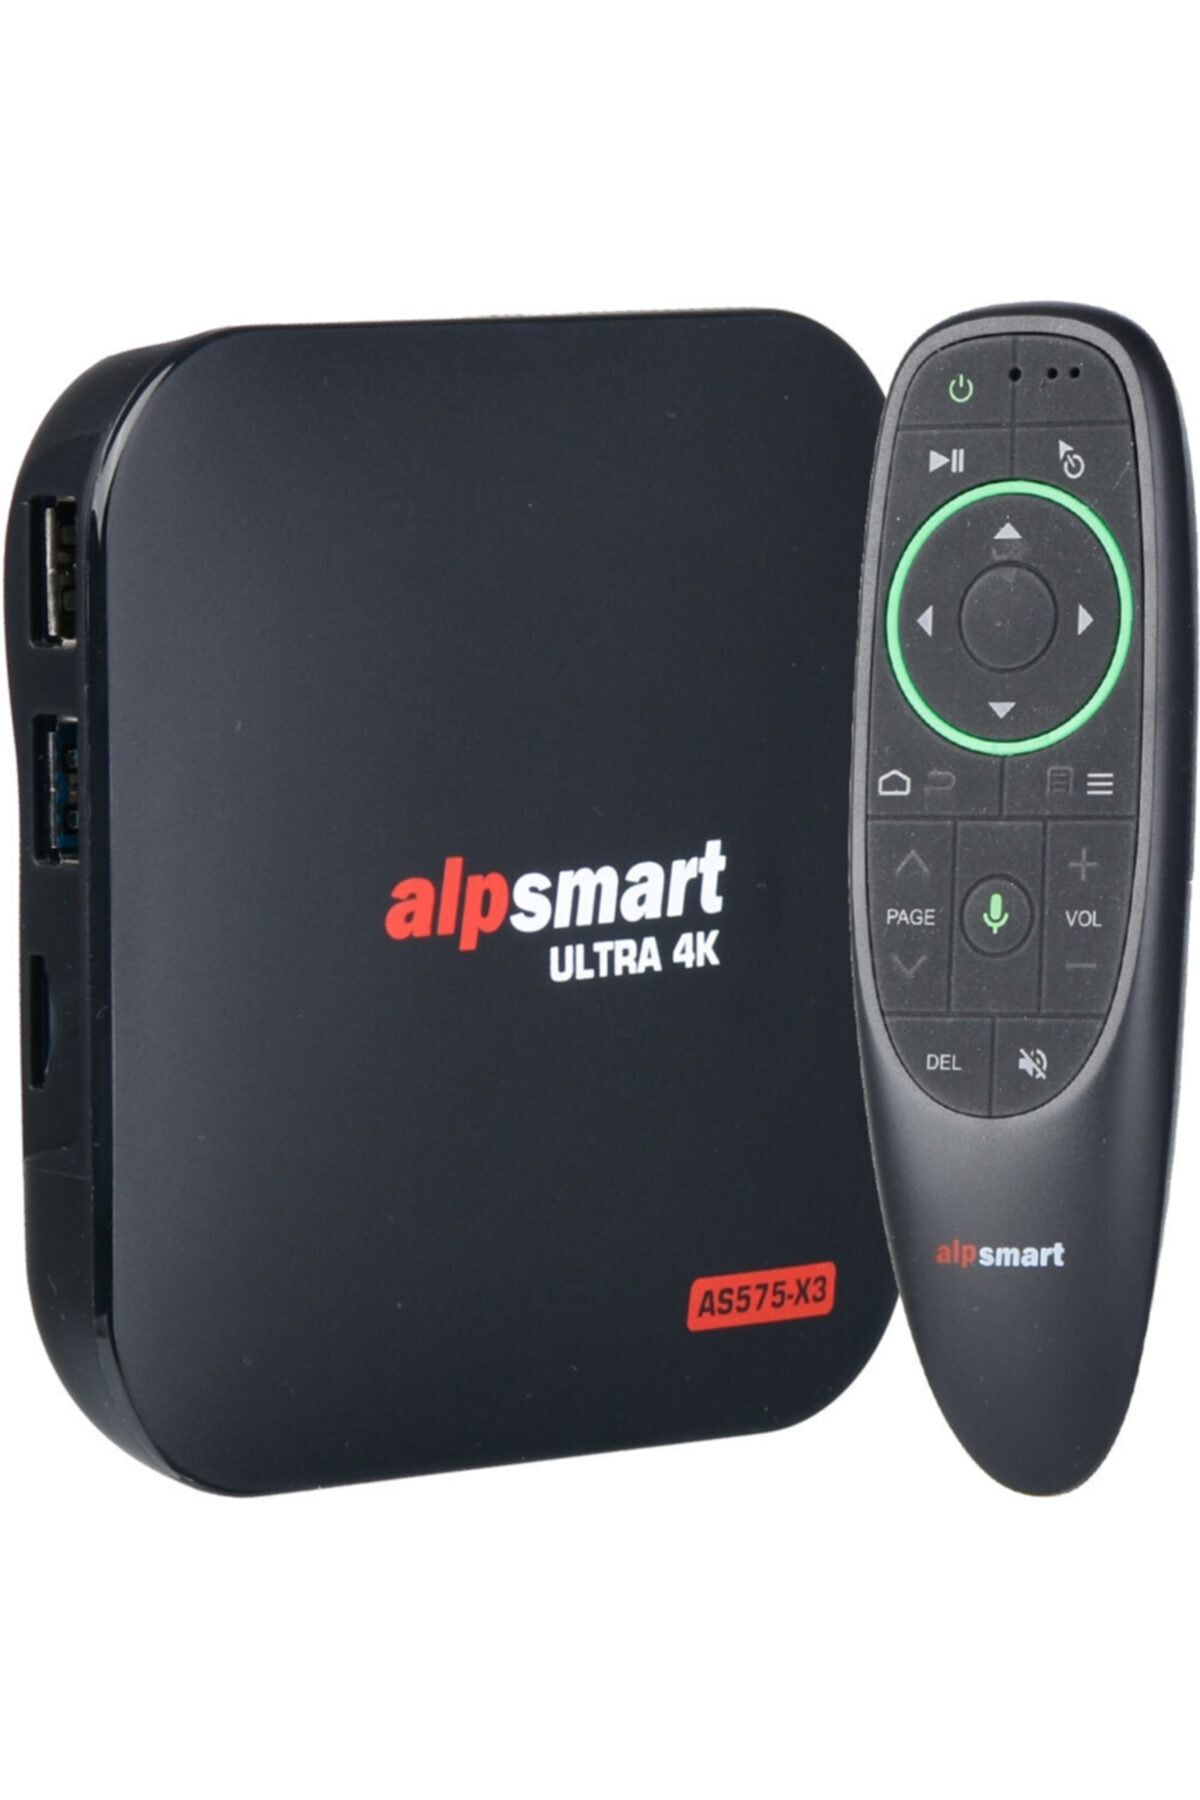 ALPSMART 4k Android Tv Box | 4gb Ram | 64gb Hafıza As575-x3